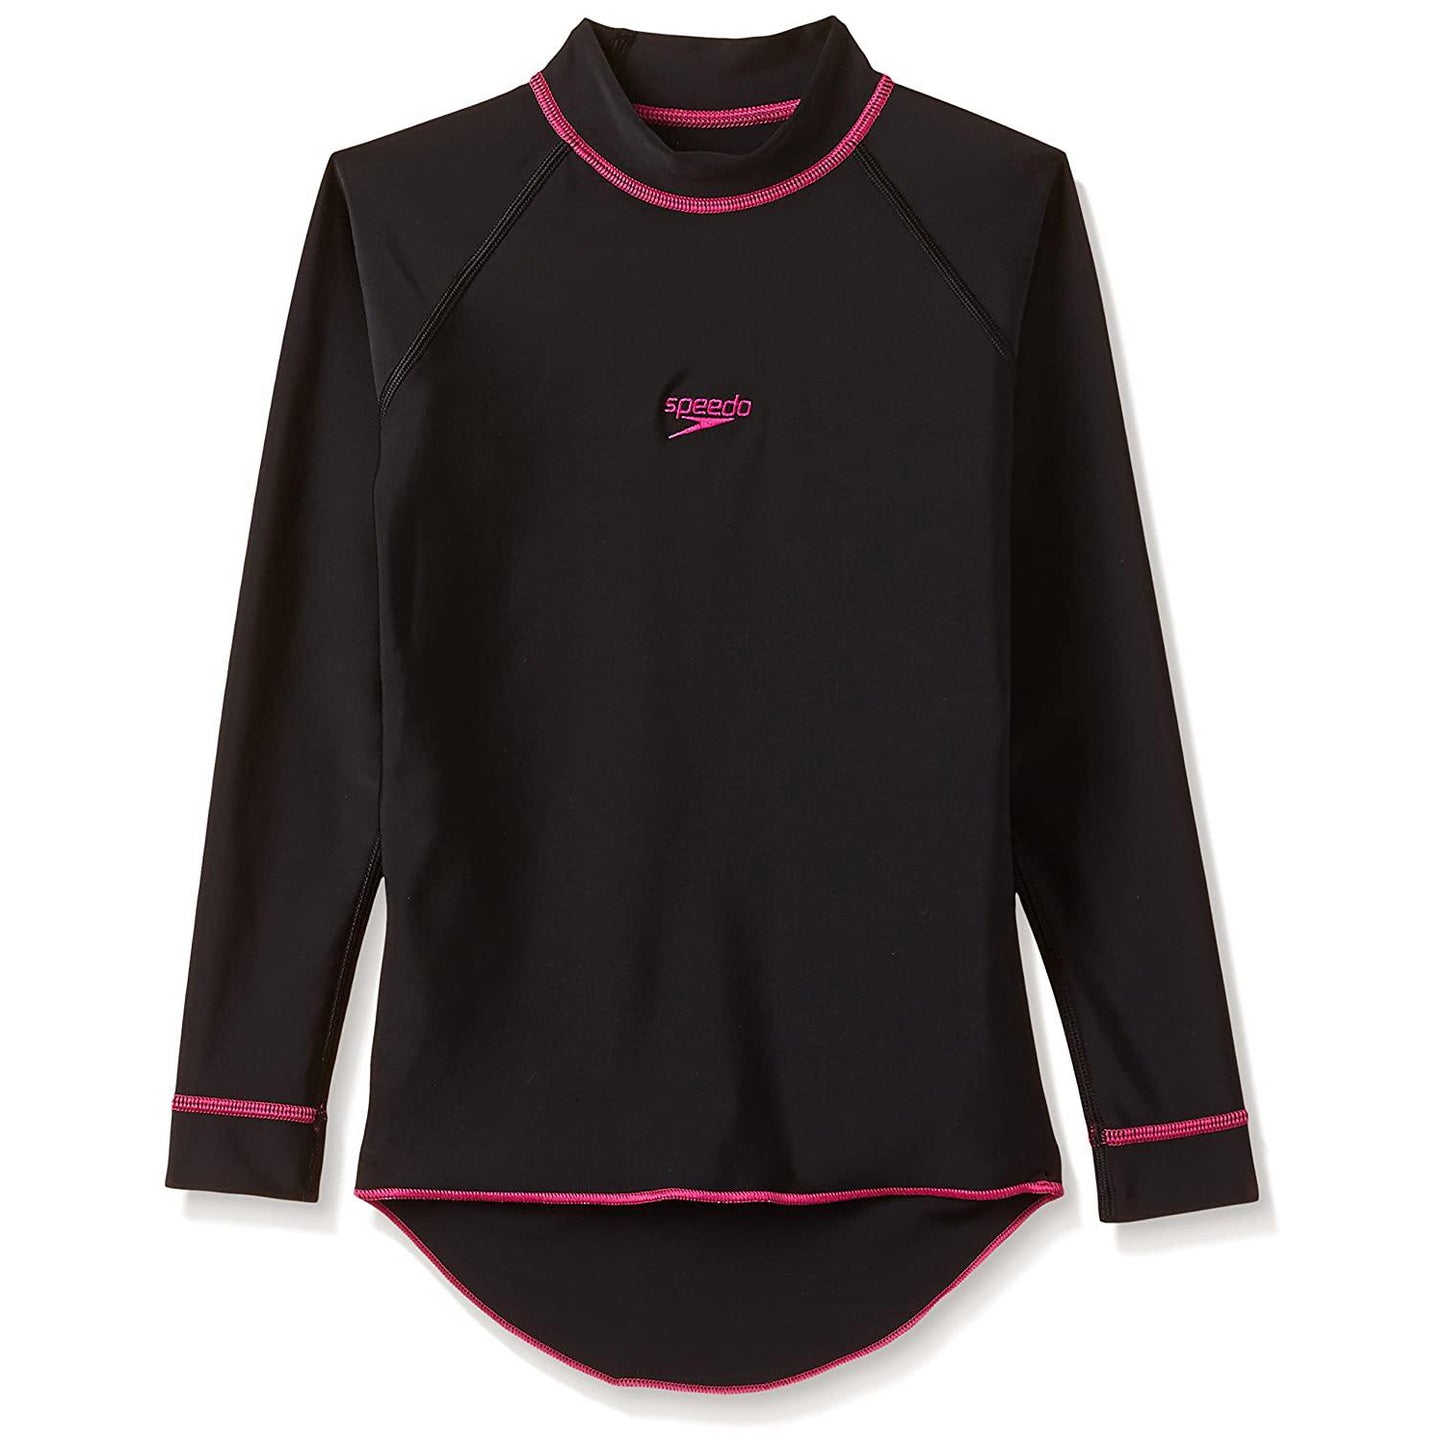 Speedo Girls Swimwear Long Sleeve Suntop (8PSG01B344_Black / Electric Pink) - Best Price online Prokicksports.com